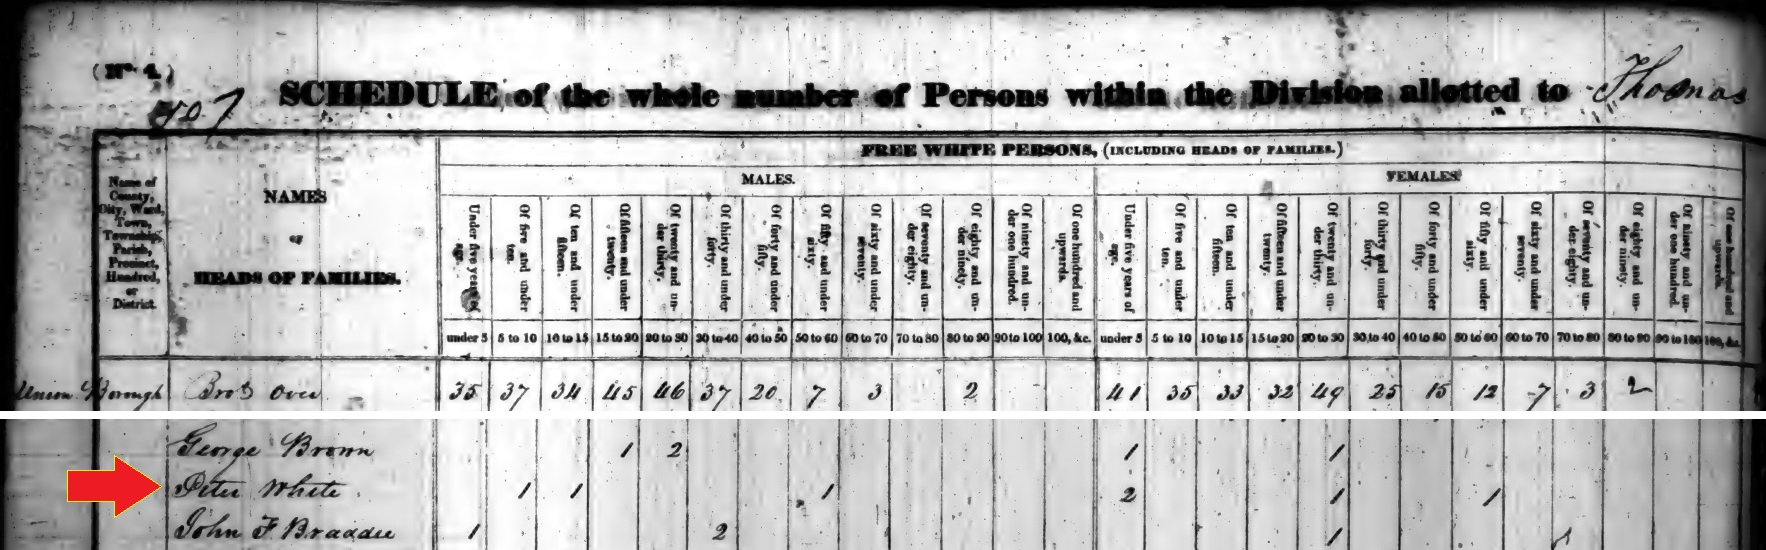 Peter White in the 1830 census records of Union Borough, Fayette County, Pennsylvania.